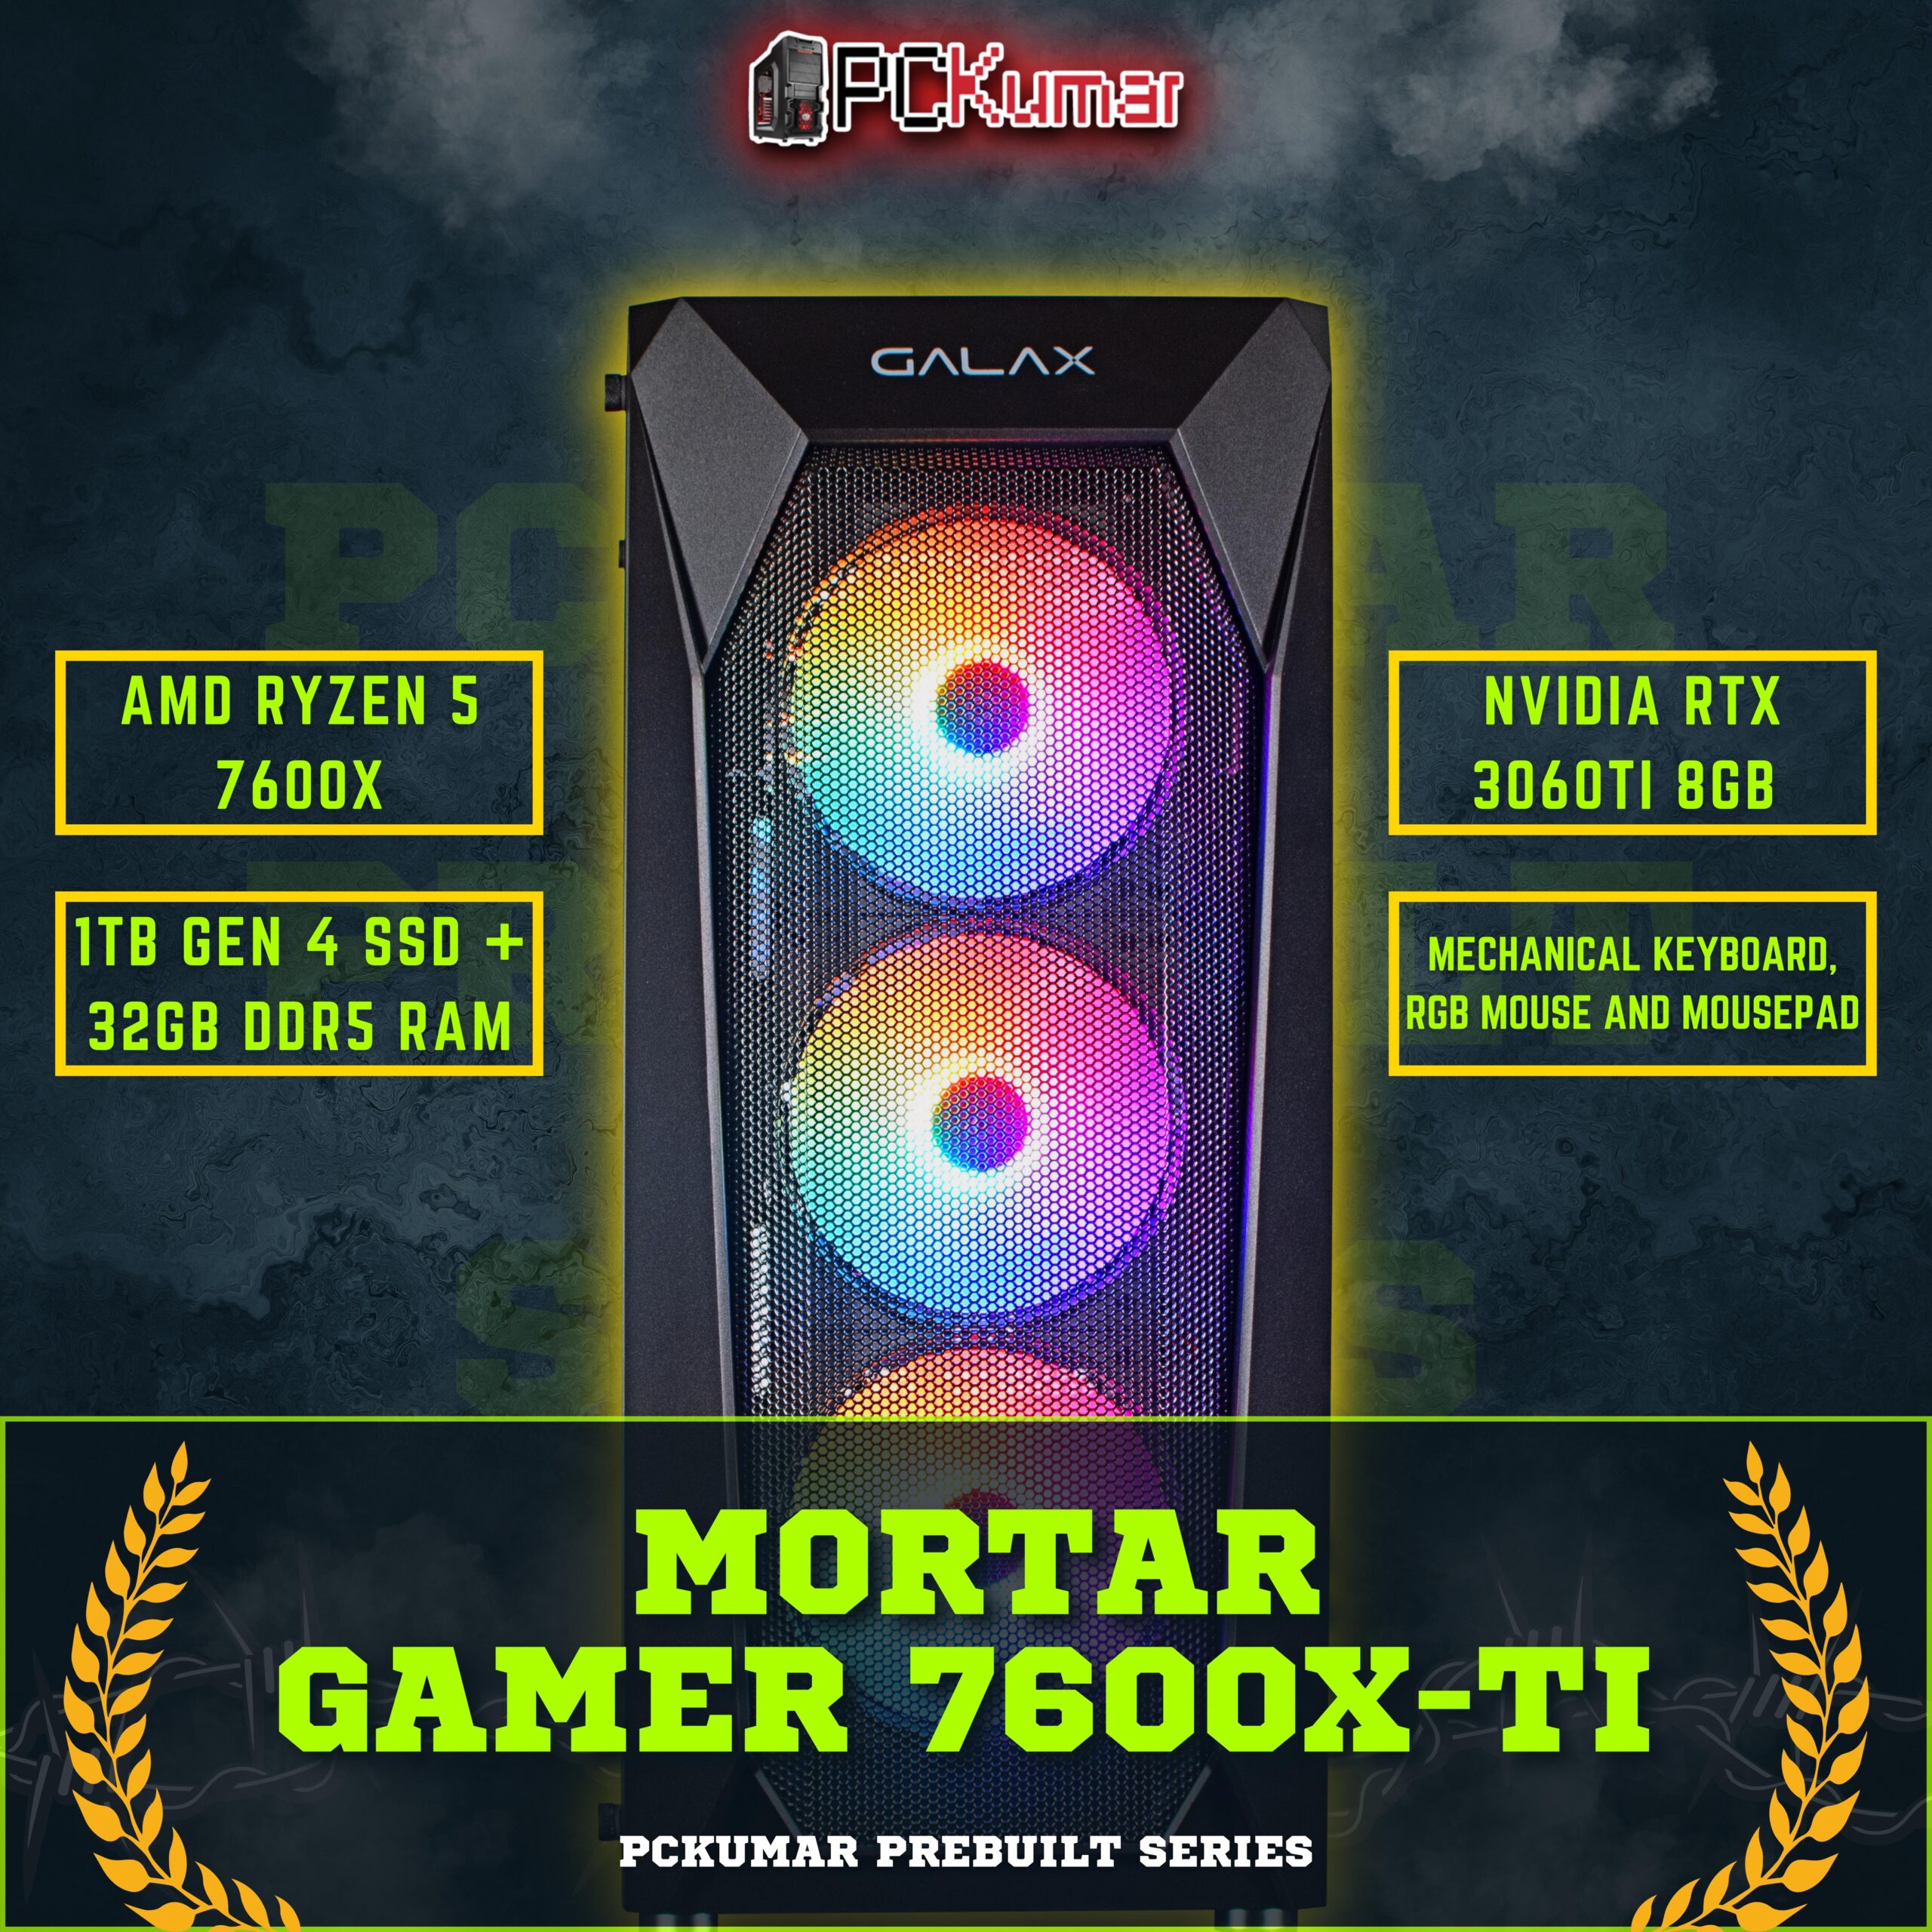 Mortar Gamer with AMD Ryzen 5 7600X + RTX 3060TI 8GB /RX  6750XT 12G